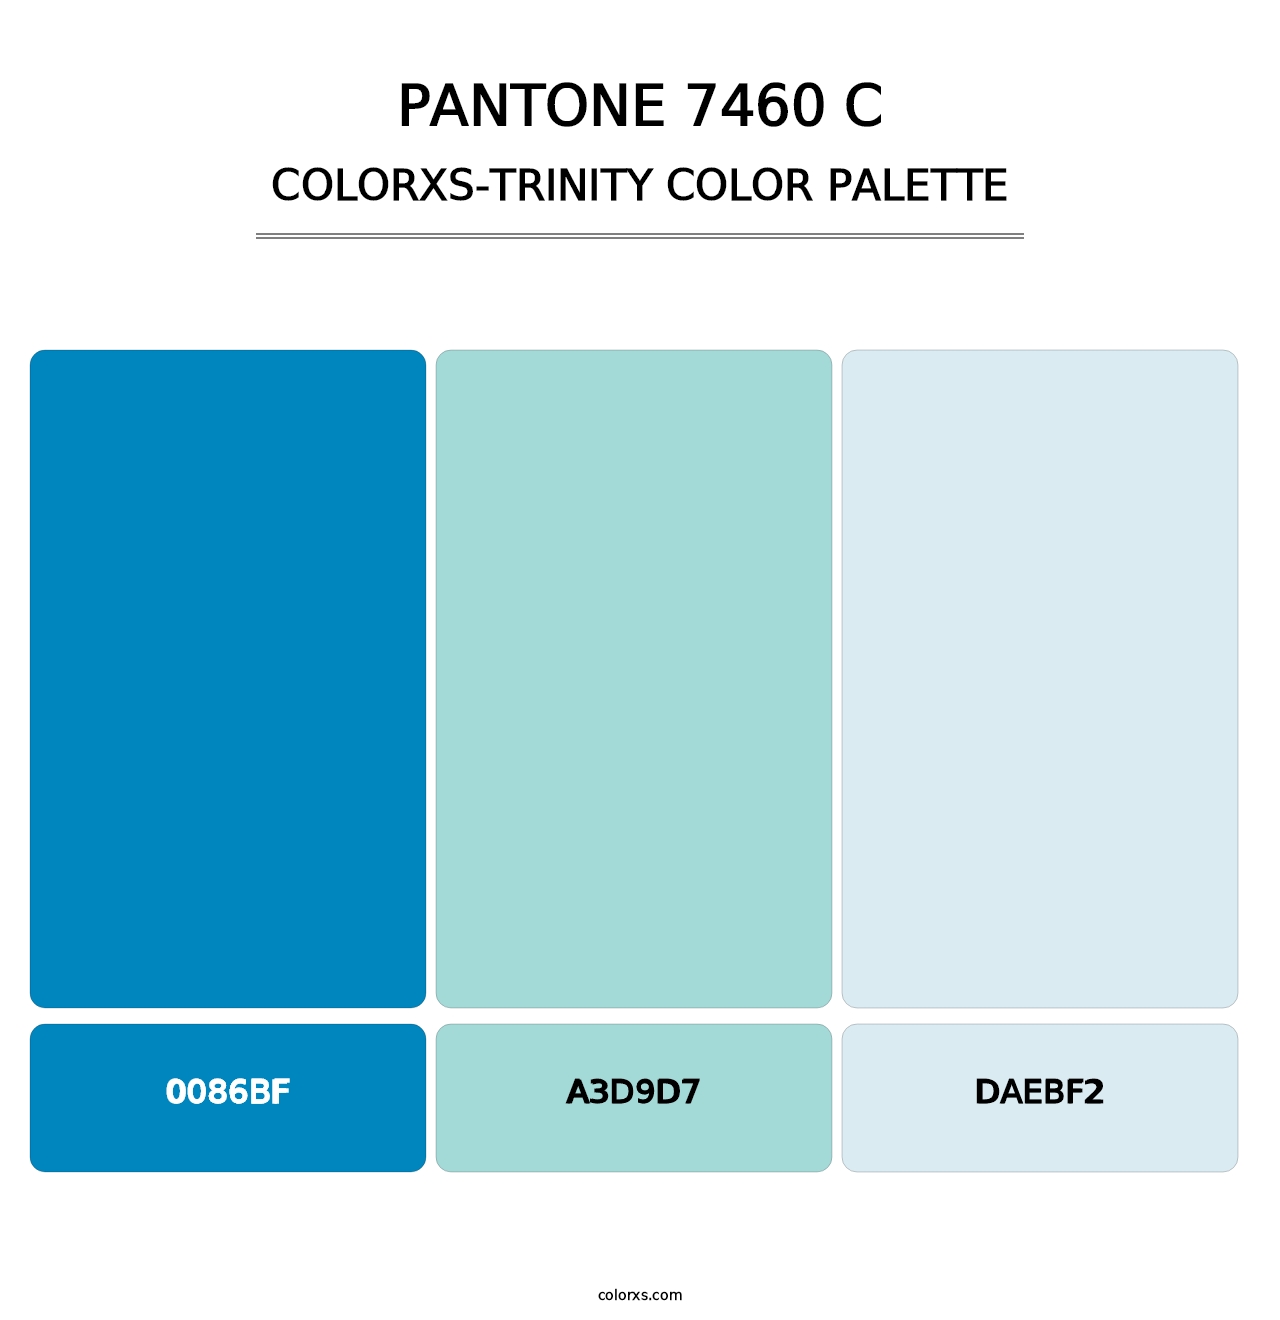 PANTONE 7460 C - Colorxs Trinity Palette